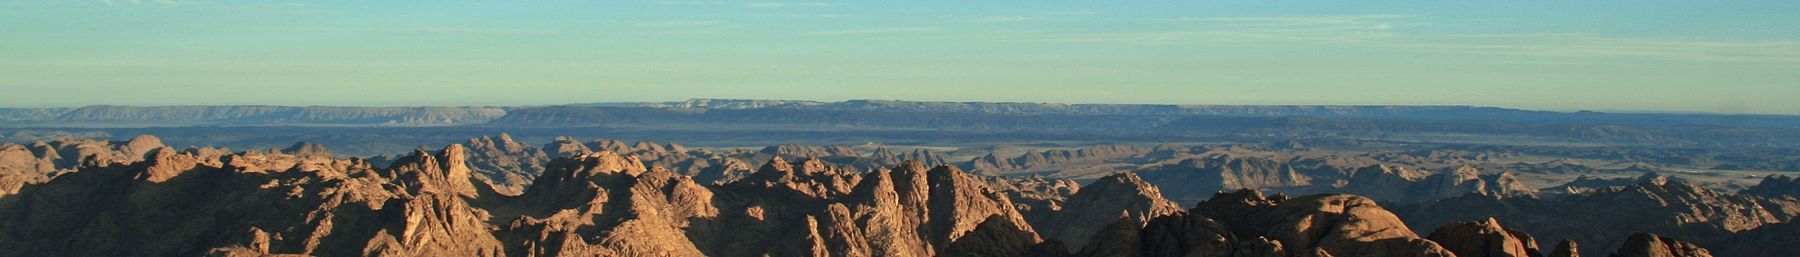 WV banner View from Mount Sinai.jpg